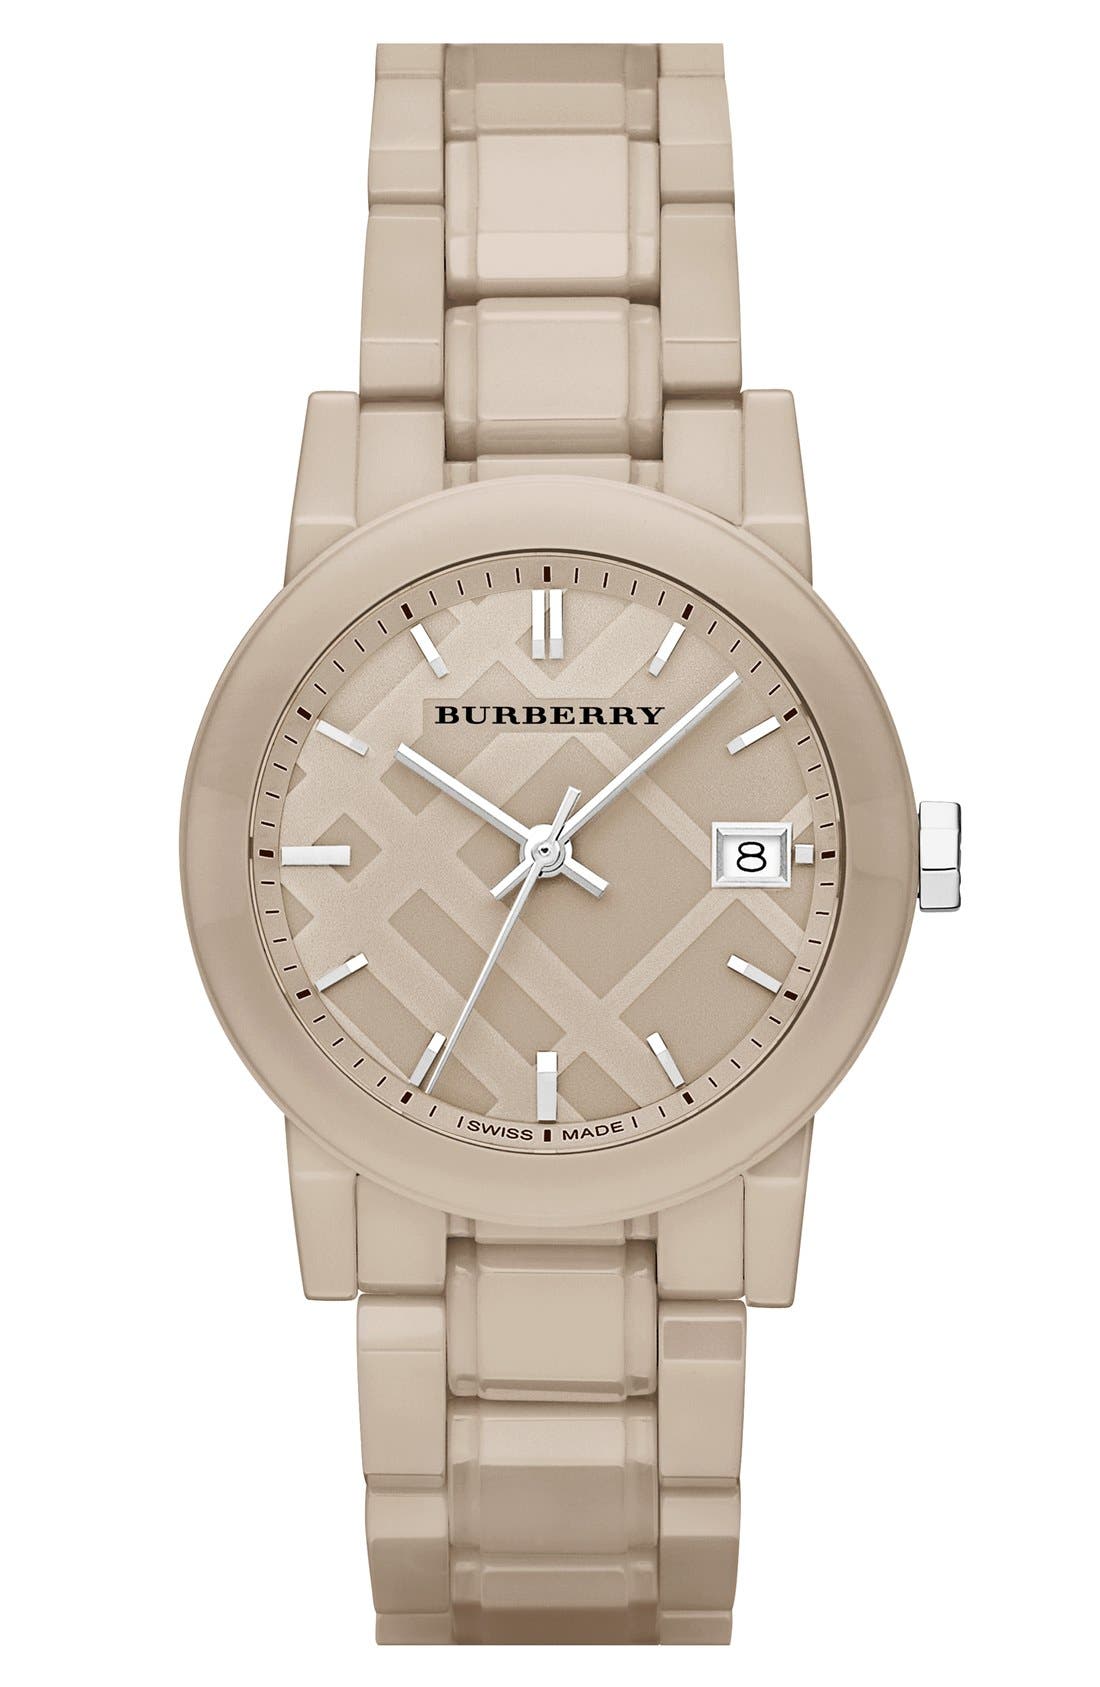 burberry check bracelet watch 34mm